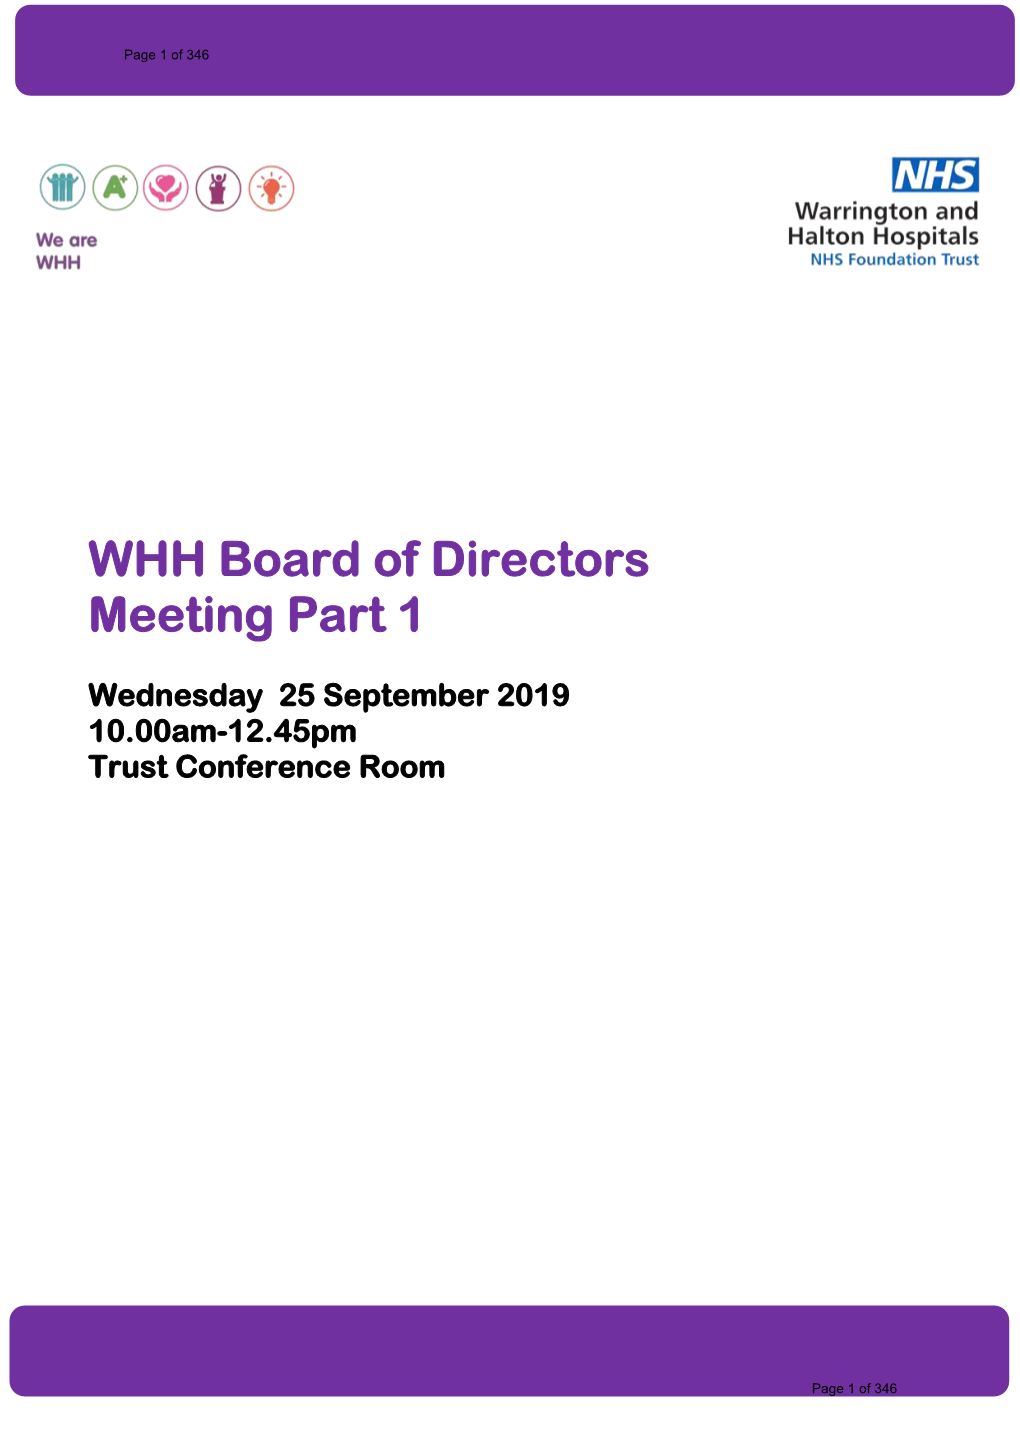 WHH Board of Directors Meeting Part 1